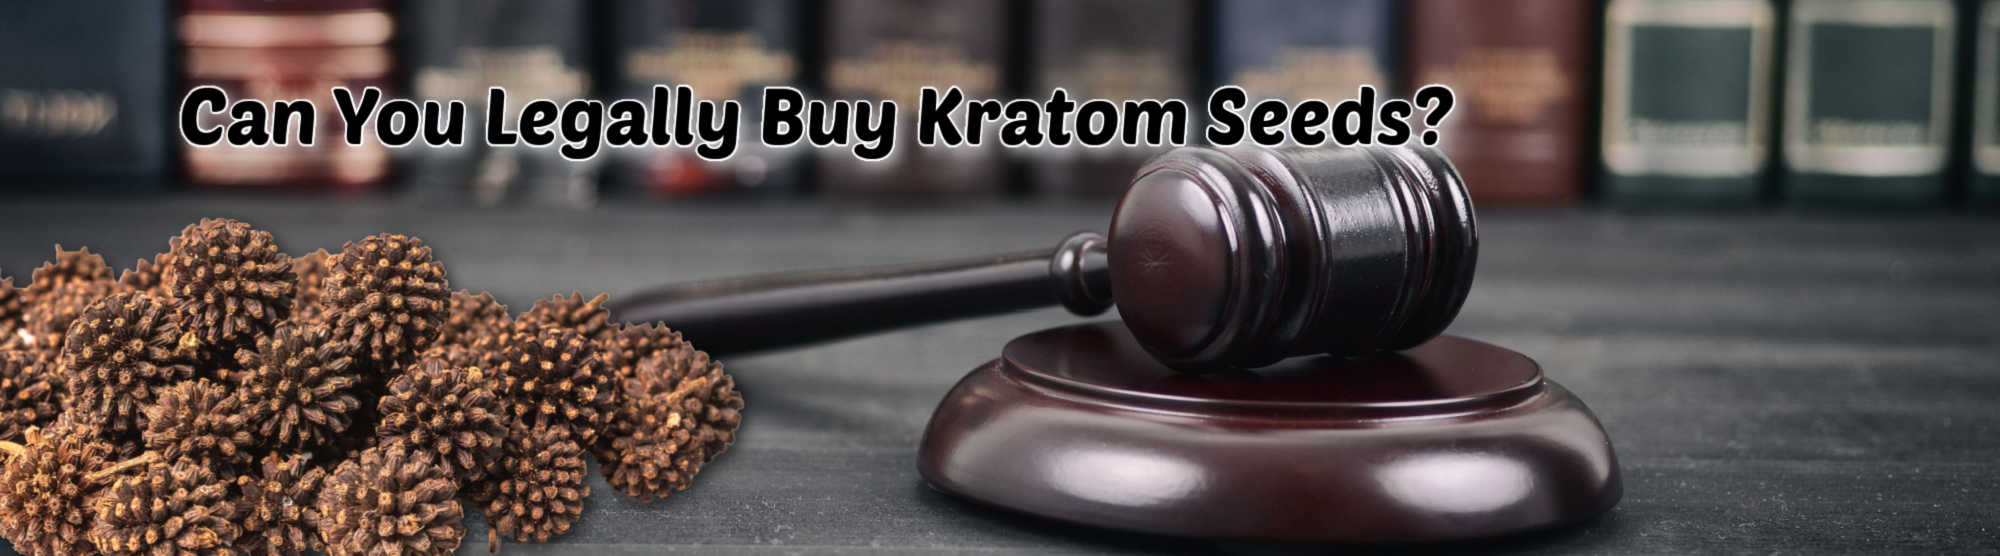 image of legality of buying kratom